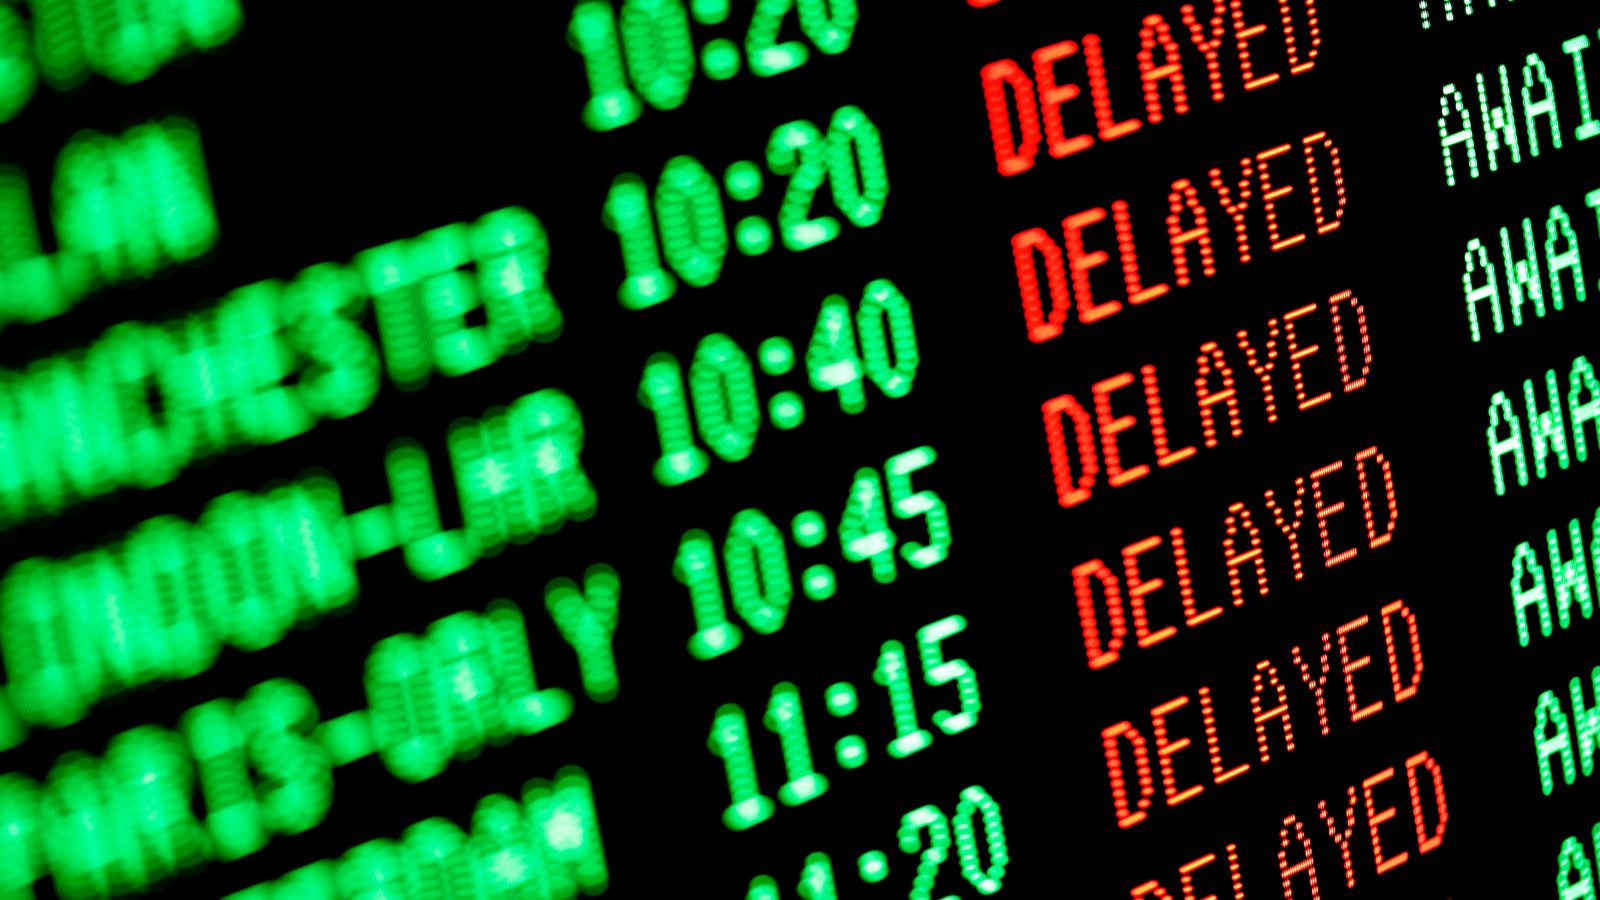 air travel delays news